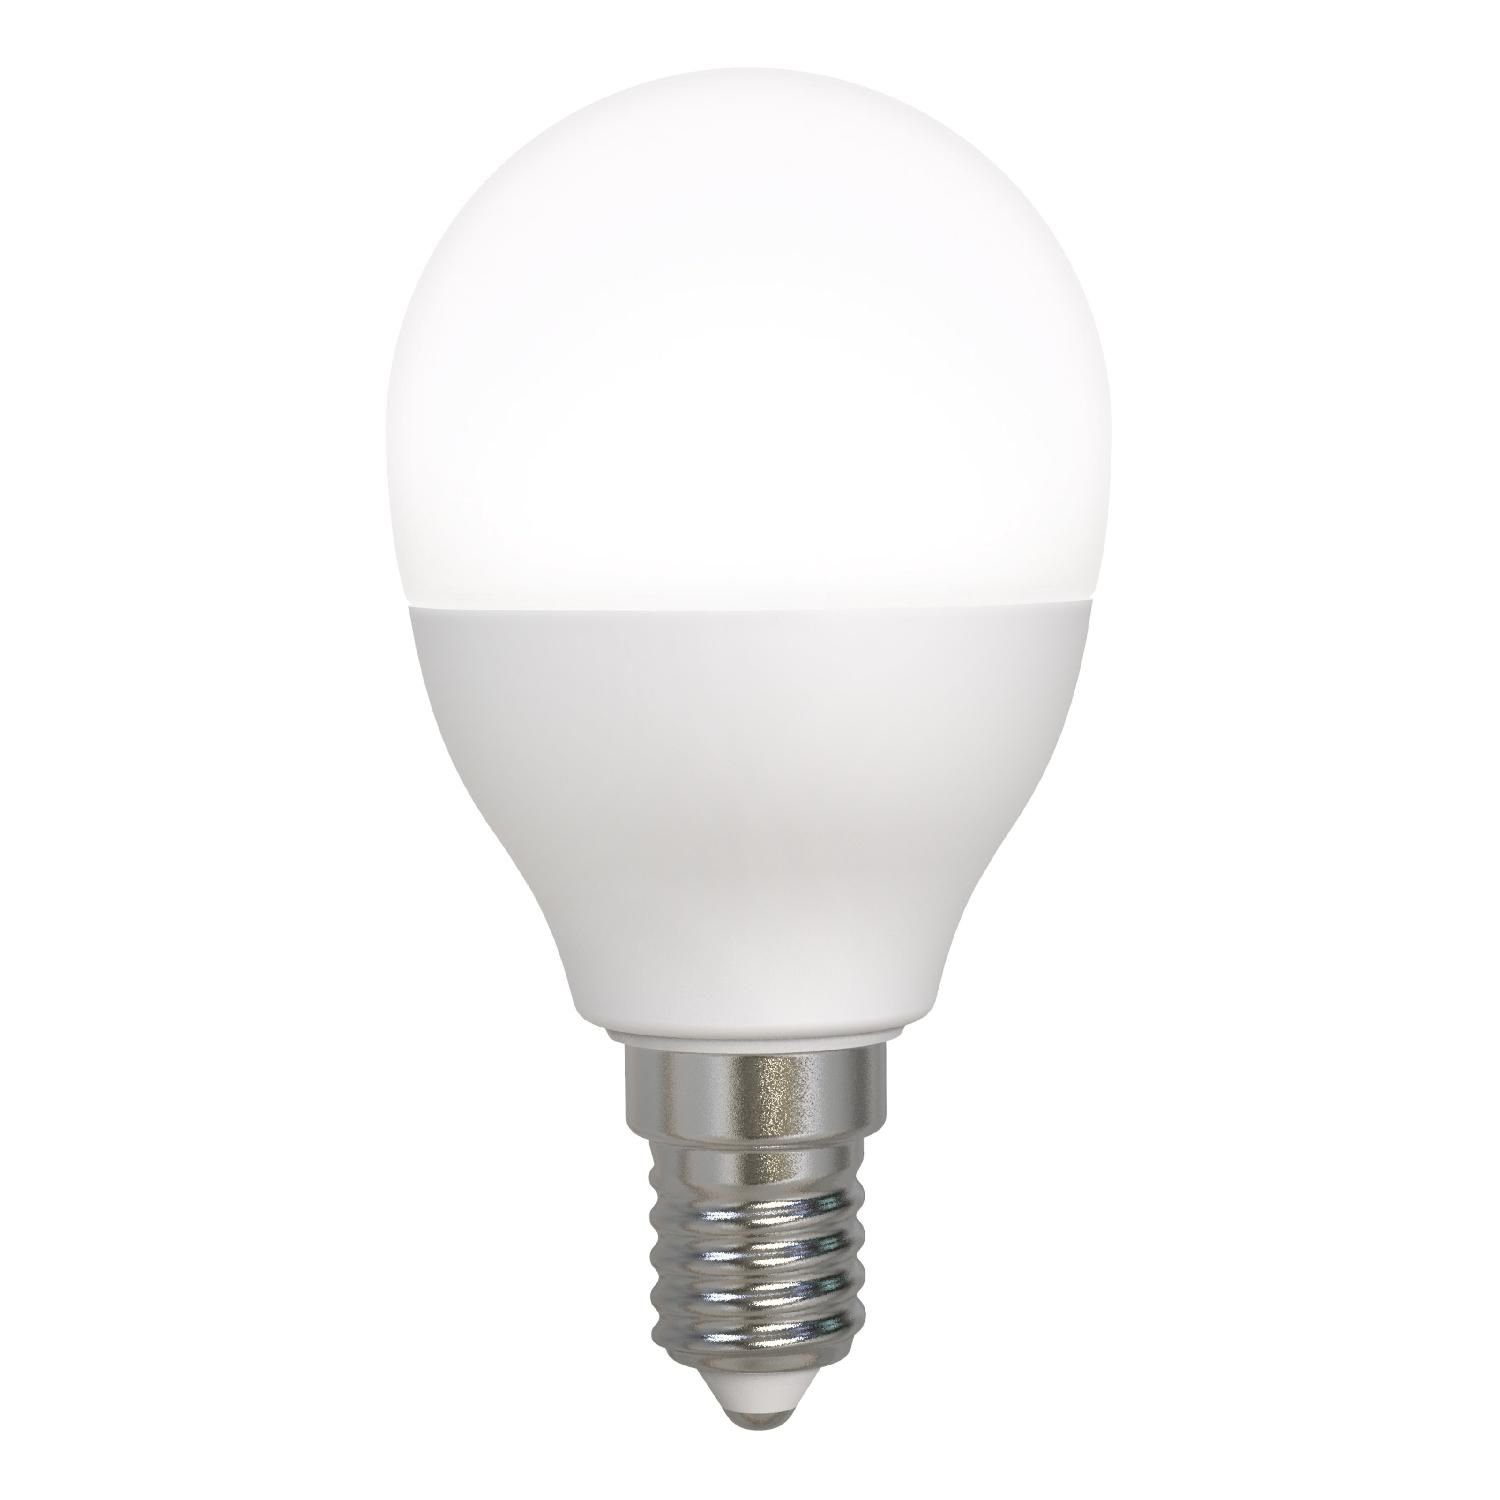 DELTACO SMART HOME LED-Leuchtmittel SH-LE14G45W Smarte LED Birne für E14 Sockel 5W dimmbar weiß, E14, inkl. 5 Jahre Herstellergarantie